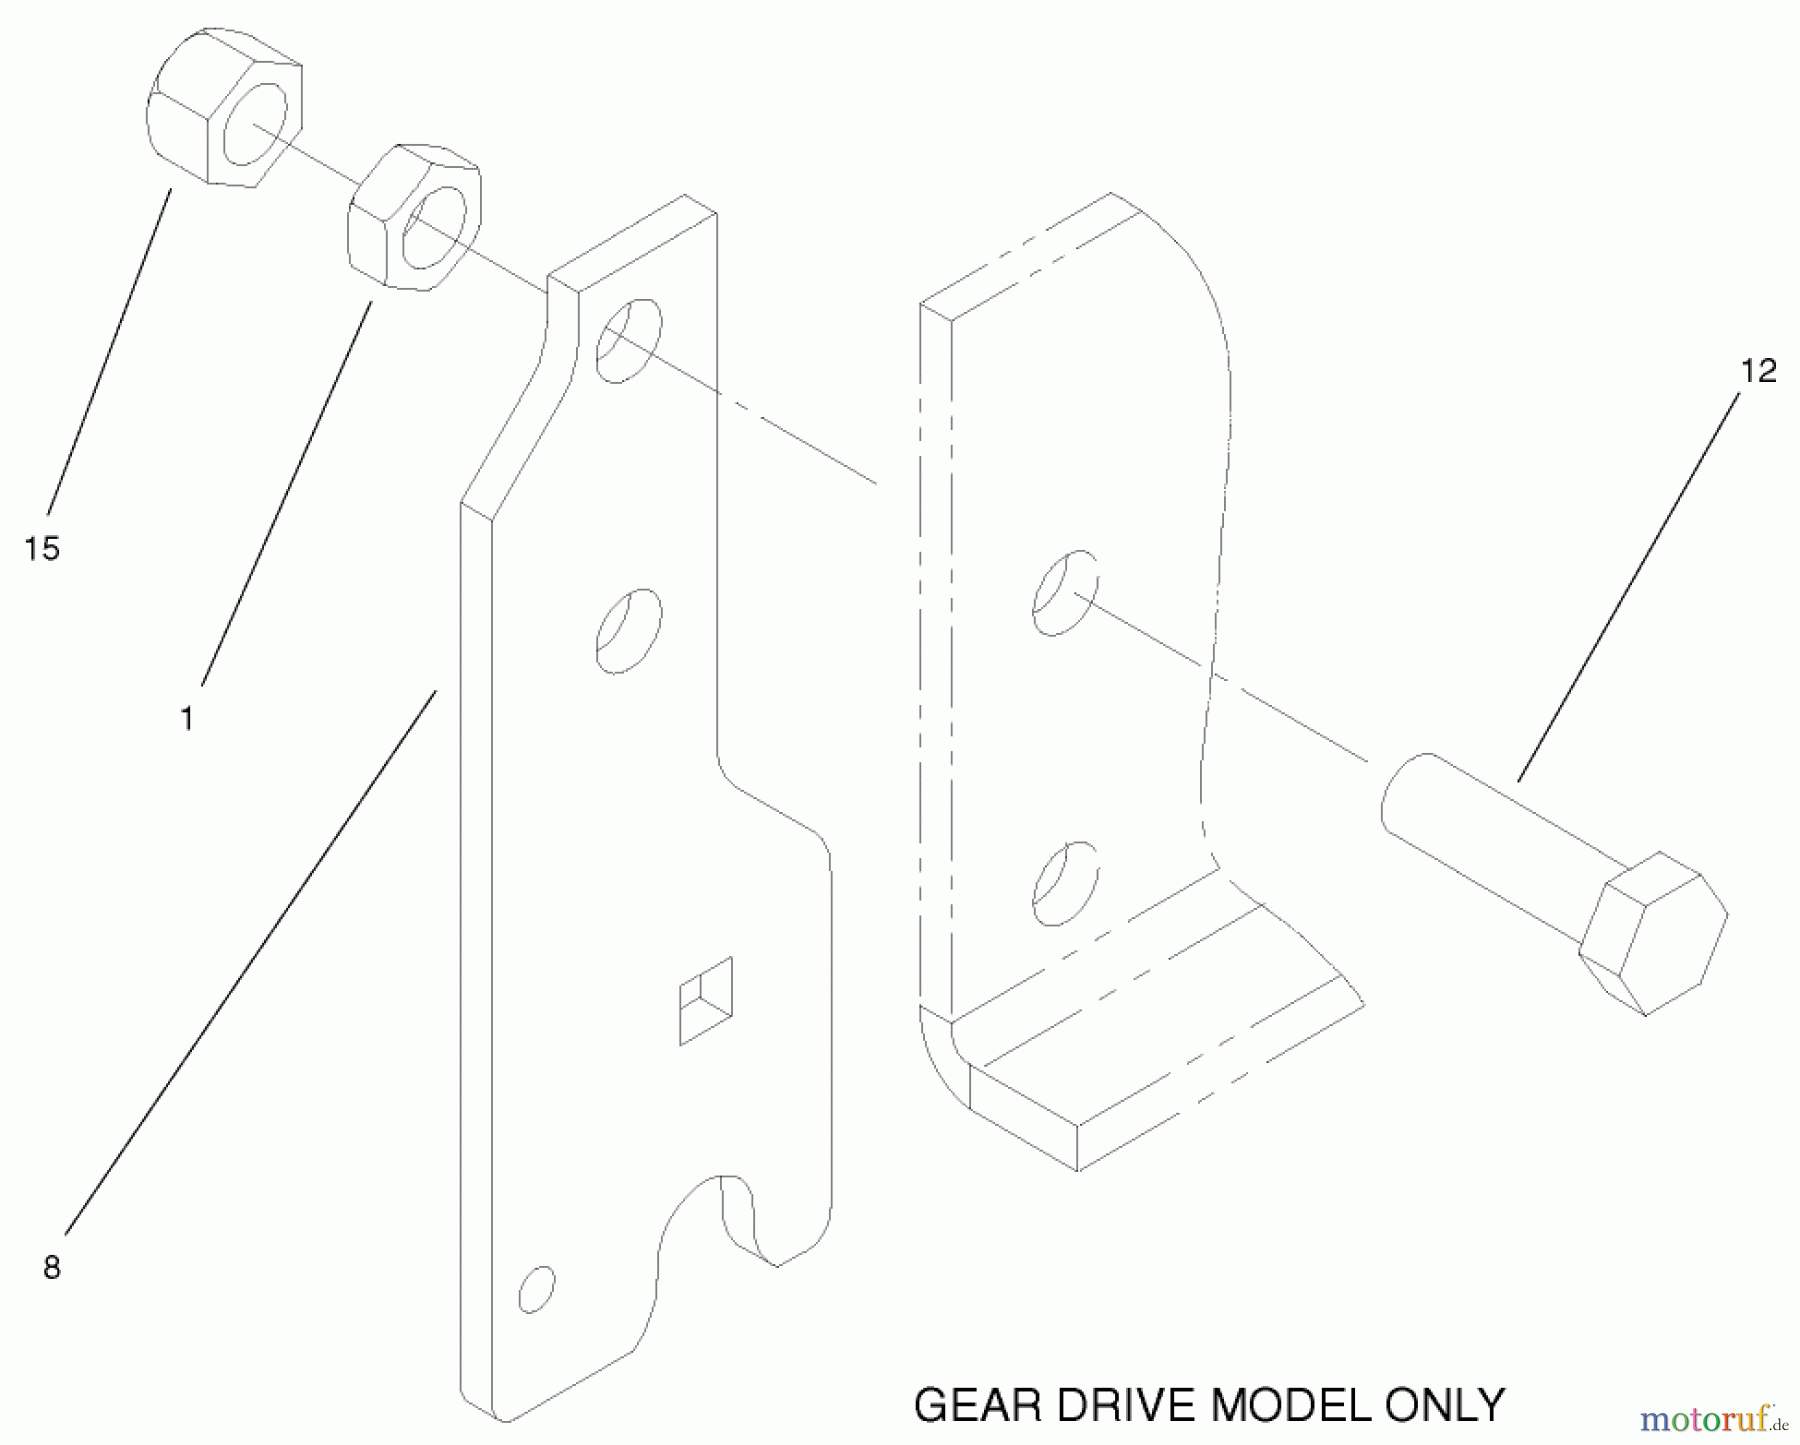  Toro Neu Accessories, Snow 92-6833 - Toro Adaptor Kit, for mounting 48